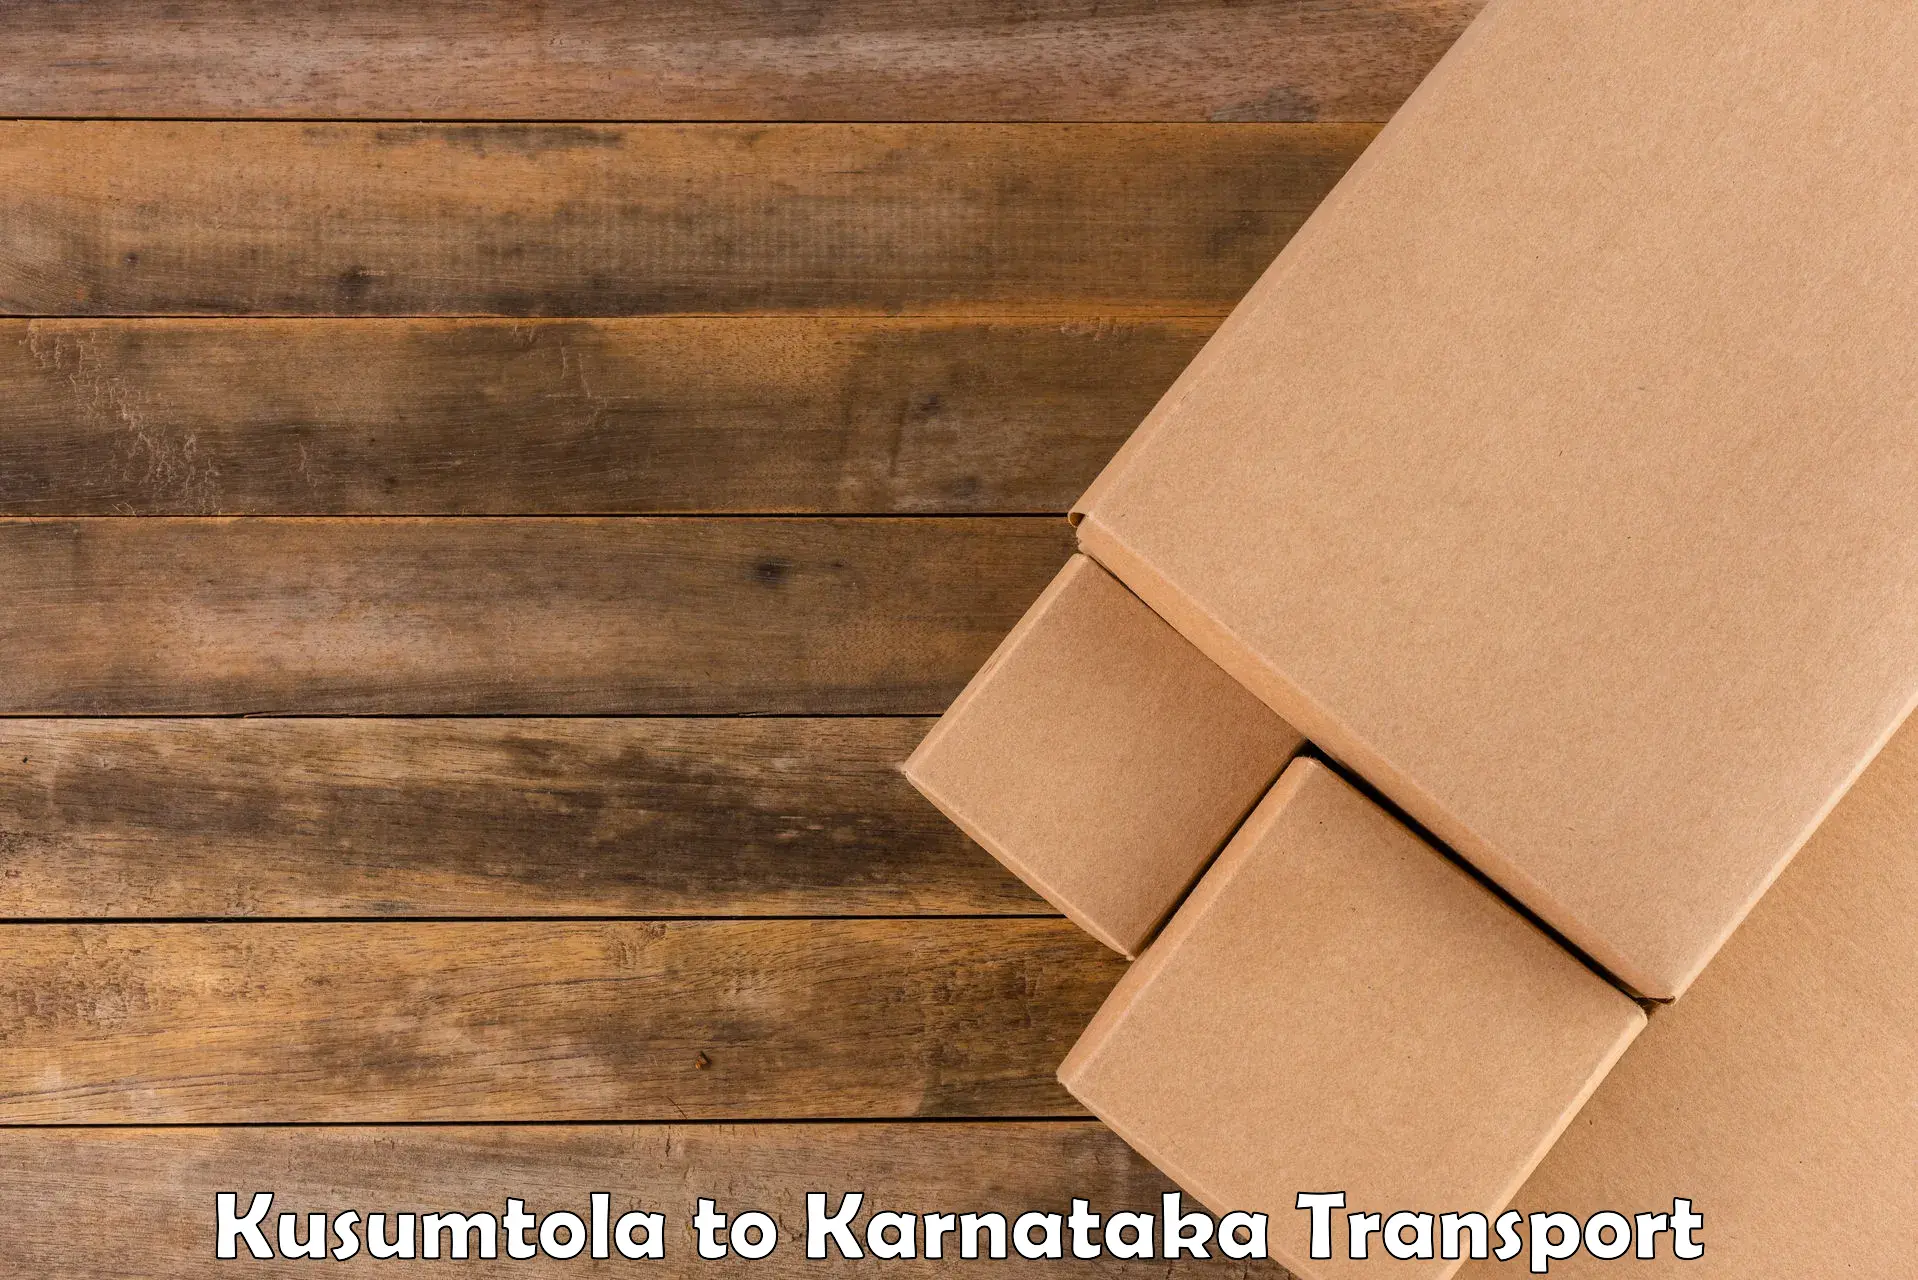 Sending bike to another city Kusumtola to Harpanahalli